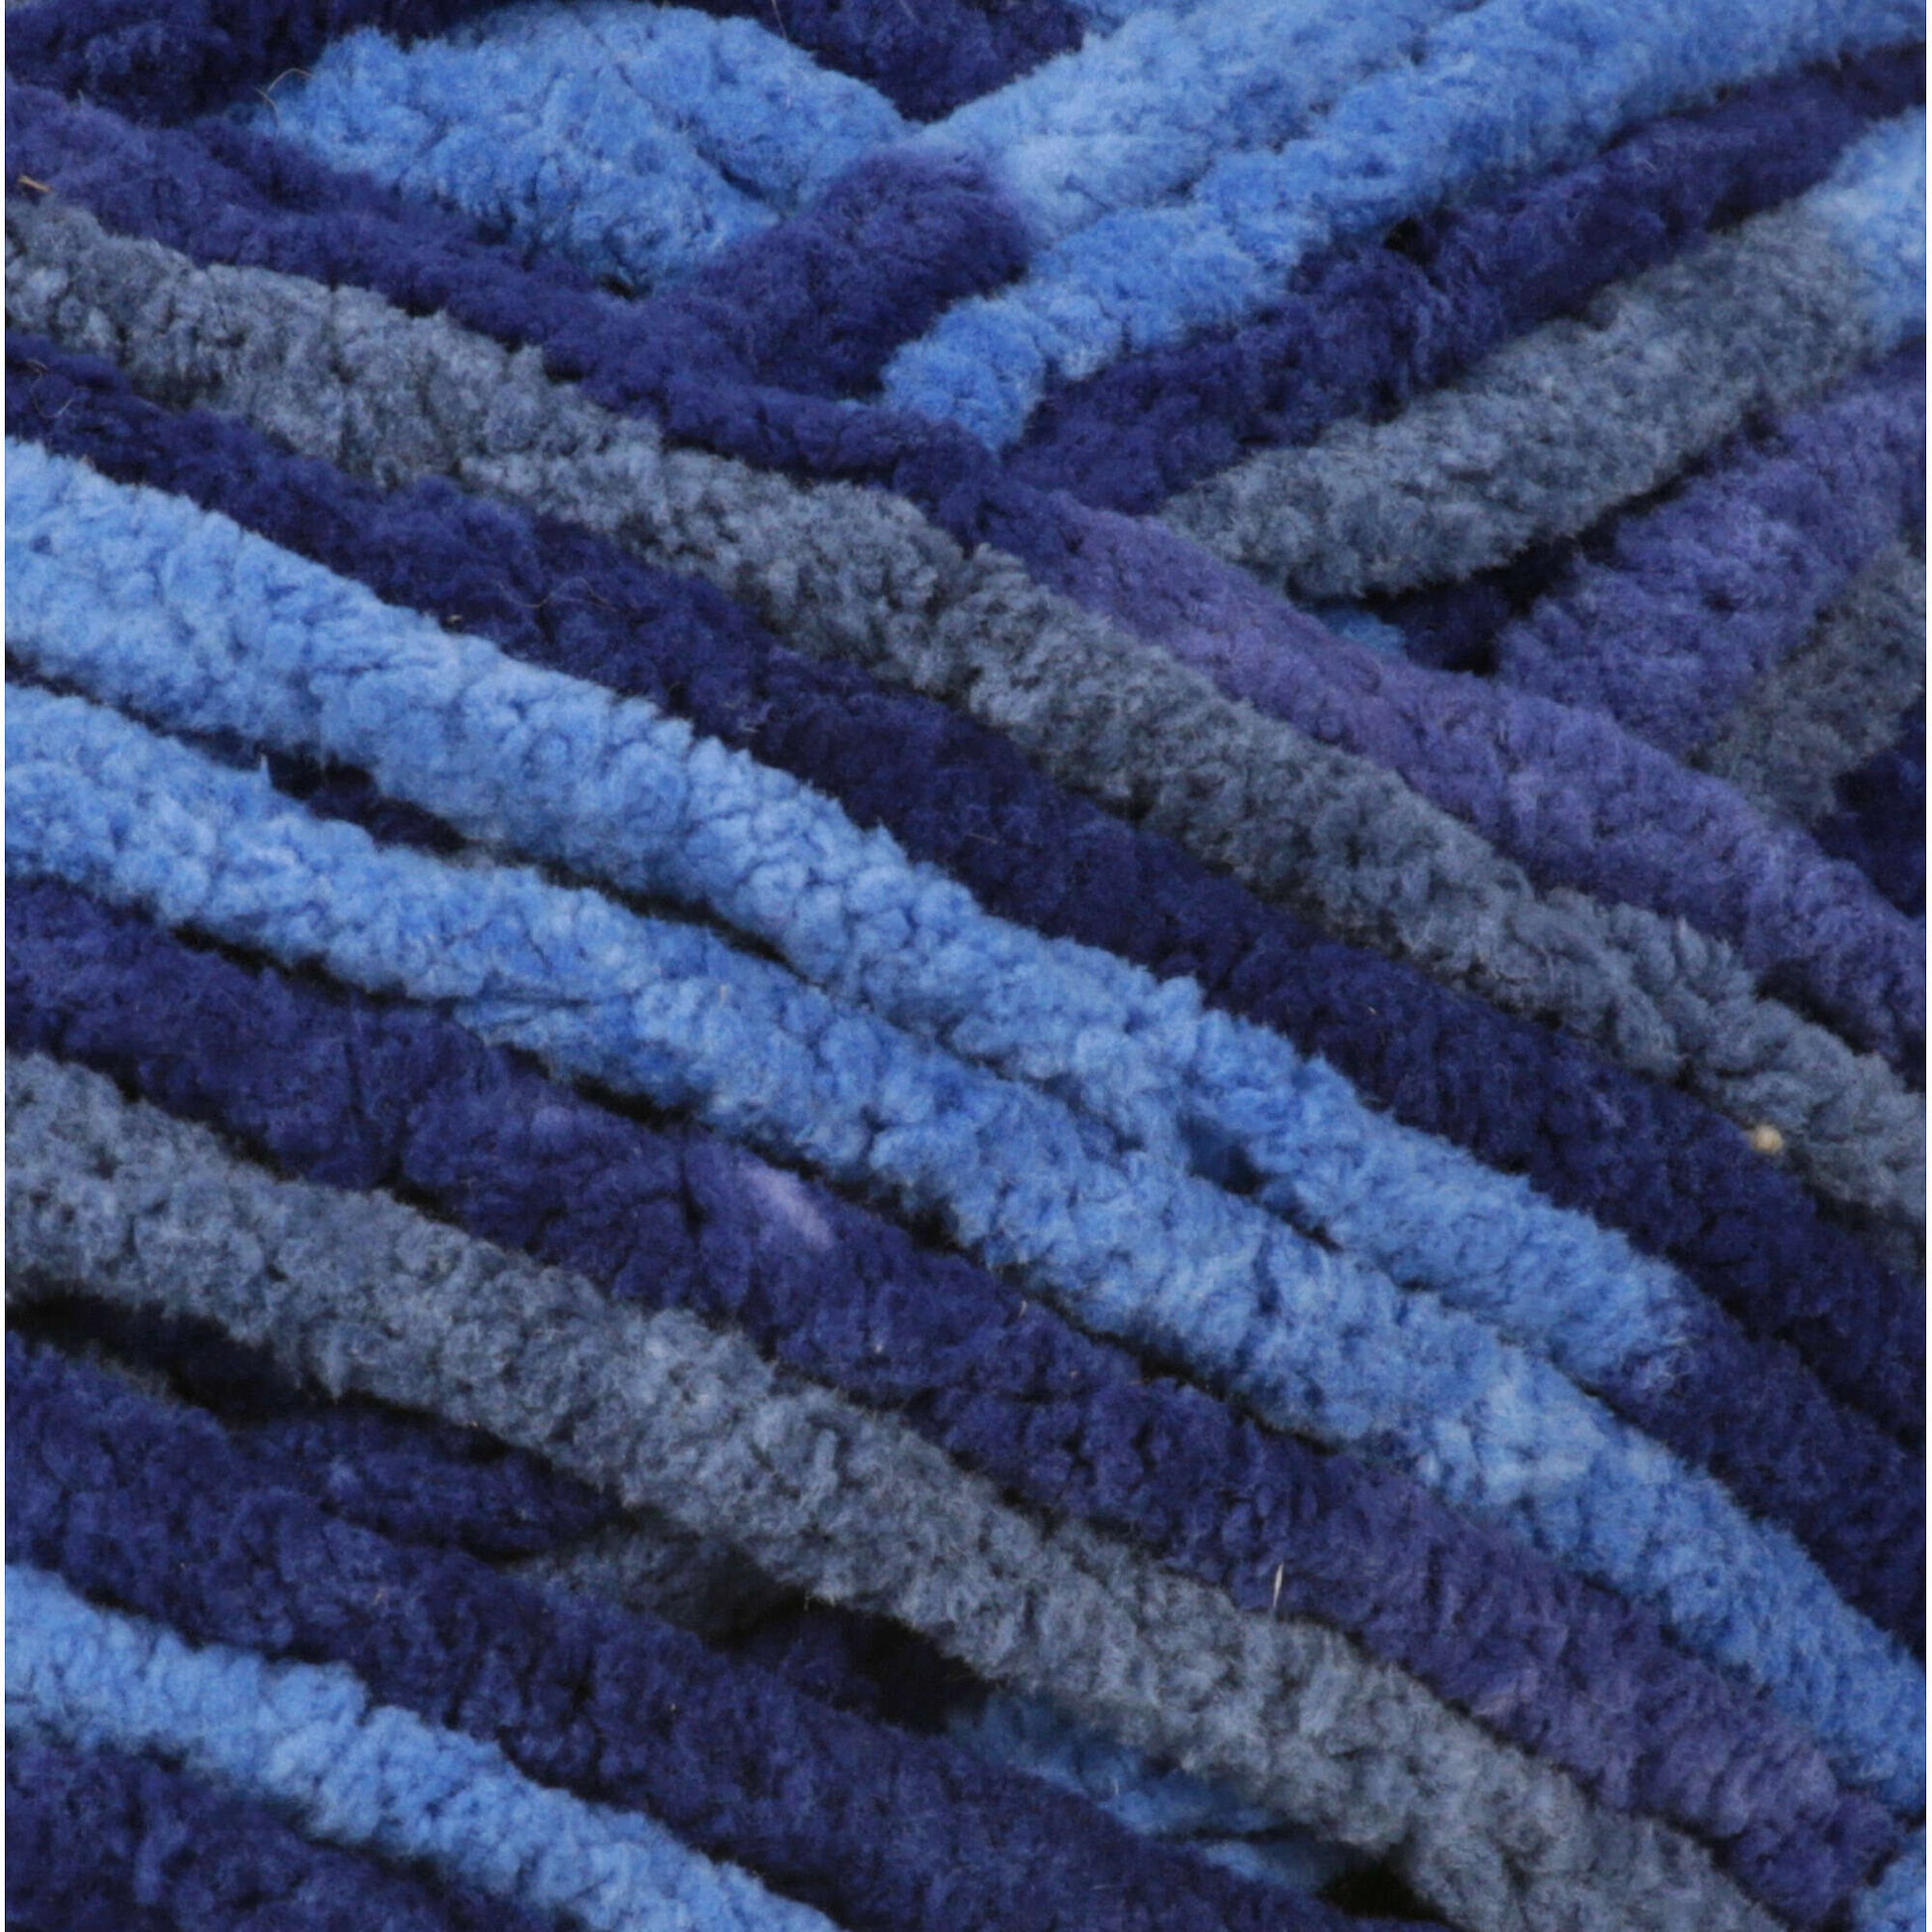 Bernat Blanket Yarn (300g/10.5oz) North Sea